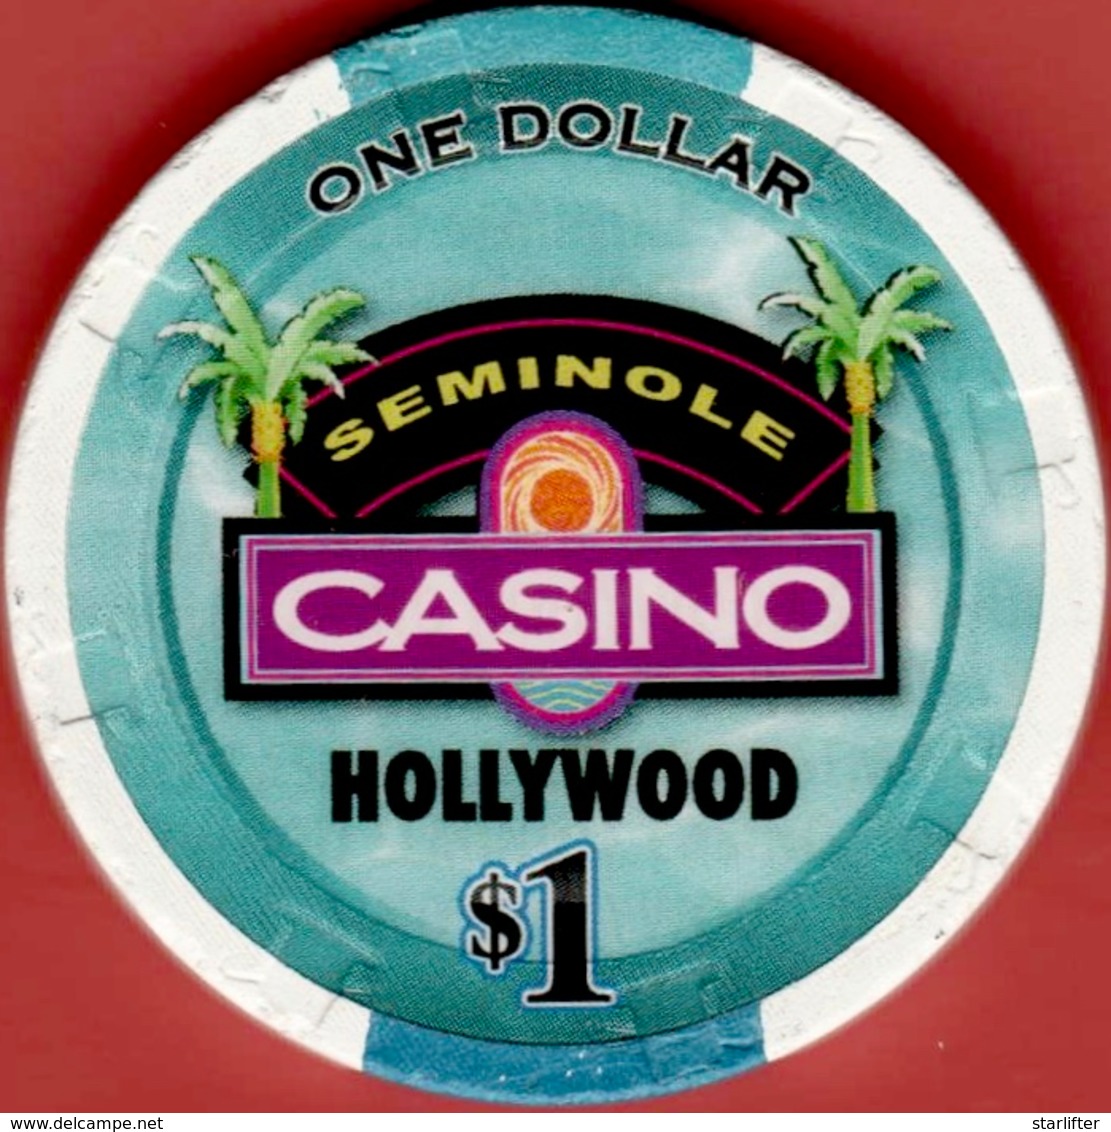 $1 Casino Chip. Seminole, Hollywood, Fl. I05. - Casino